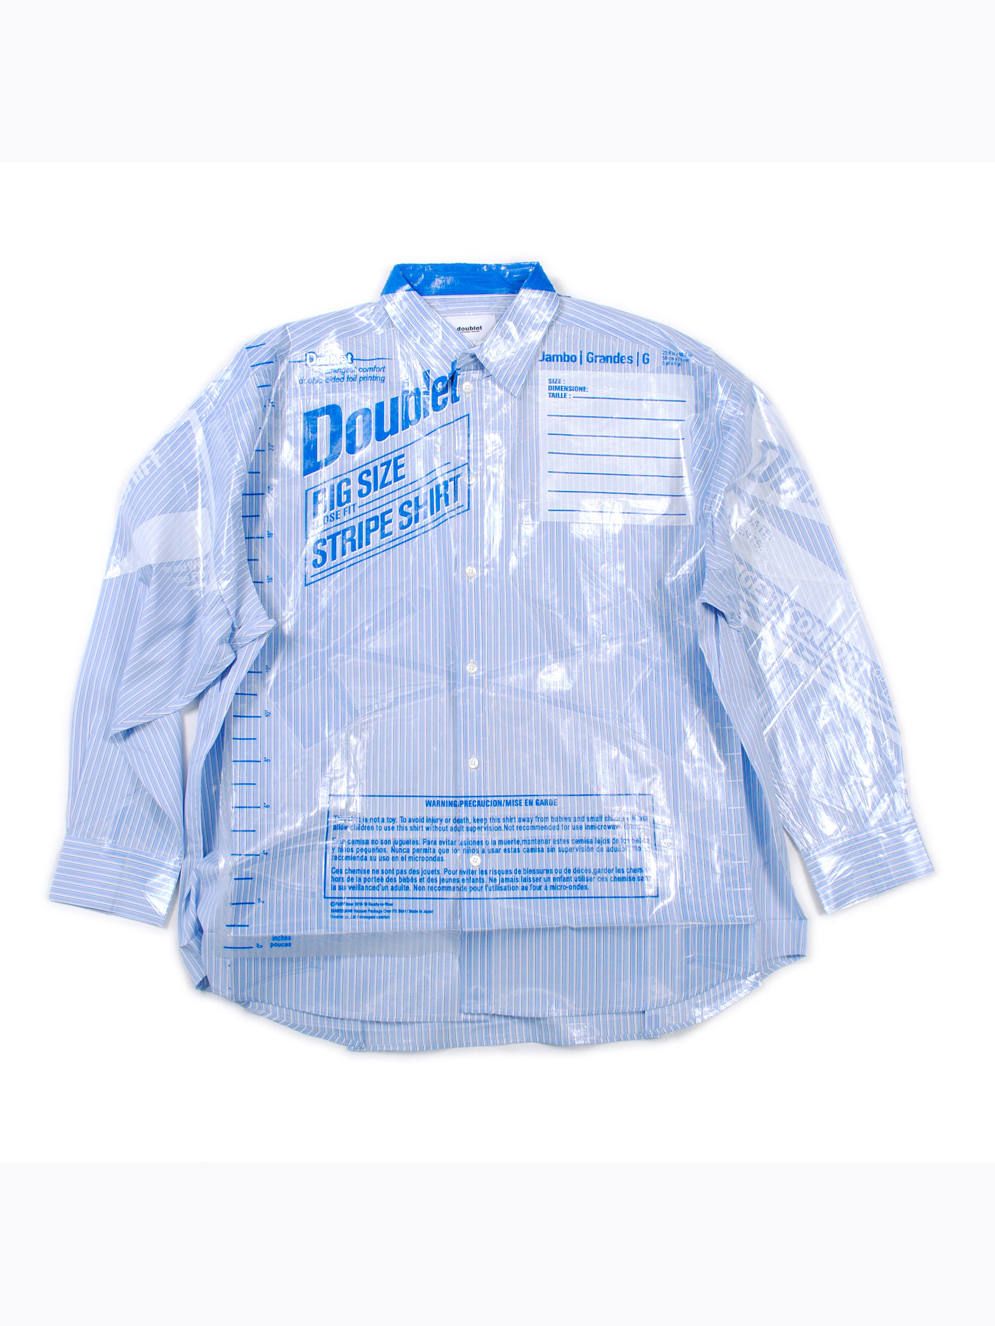 doublet オーバーサイズパッケージシャツ 【最安値】